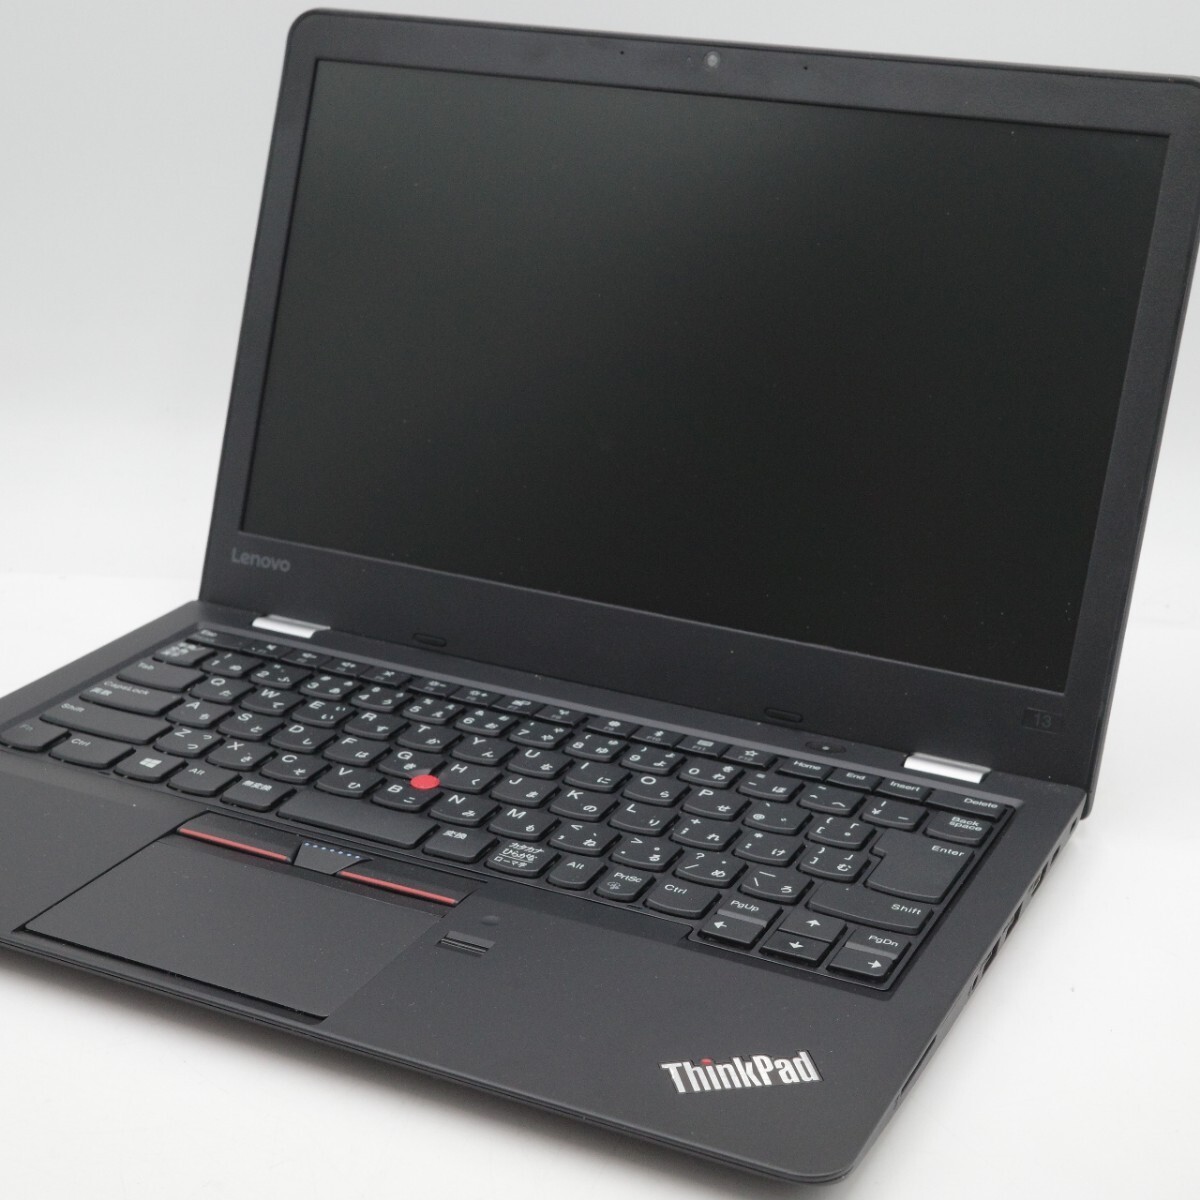 LENOVO ThinkPad 13 2nd Gen レノボ 13.3型 ノートパソコン Compliance intel I3-7100U メモリ4GB Windows10 PC 初期済 簡易動作確認済み_画像1